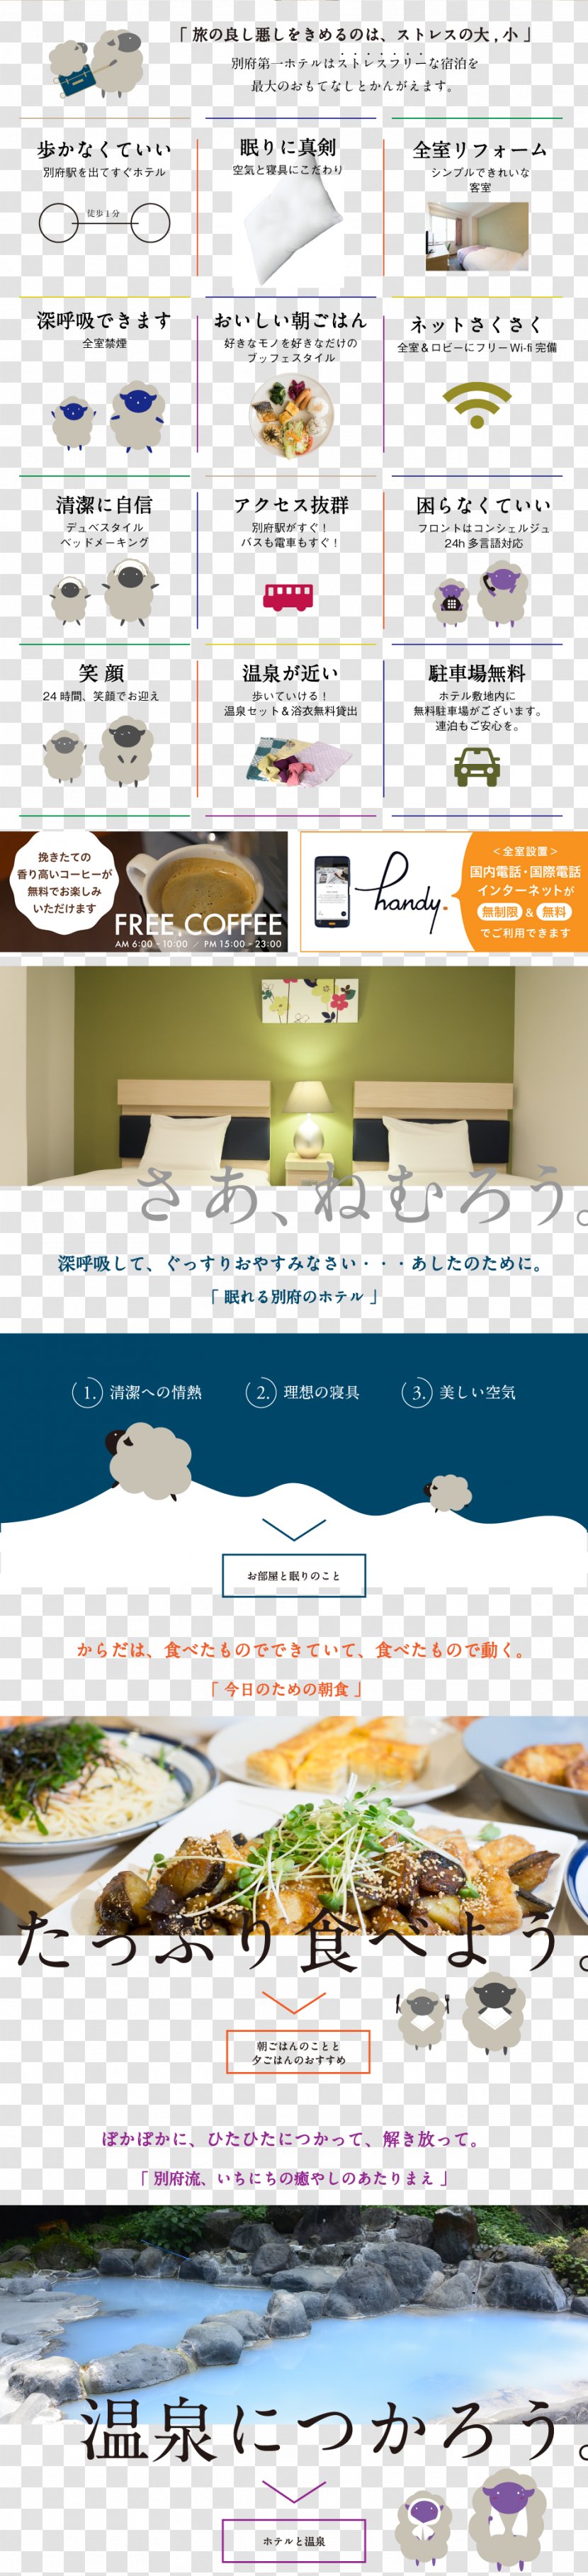 Beppu Daiichi Hotel Rakuten Travel Accommodation - Need Transparent PNG